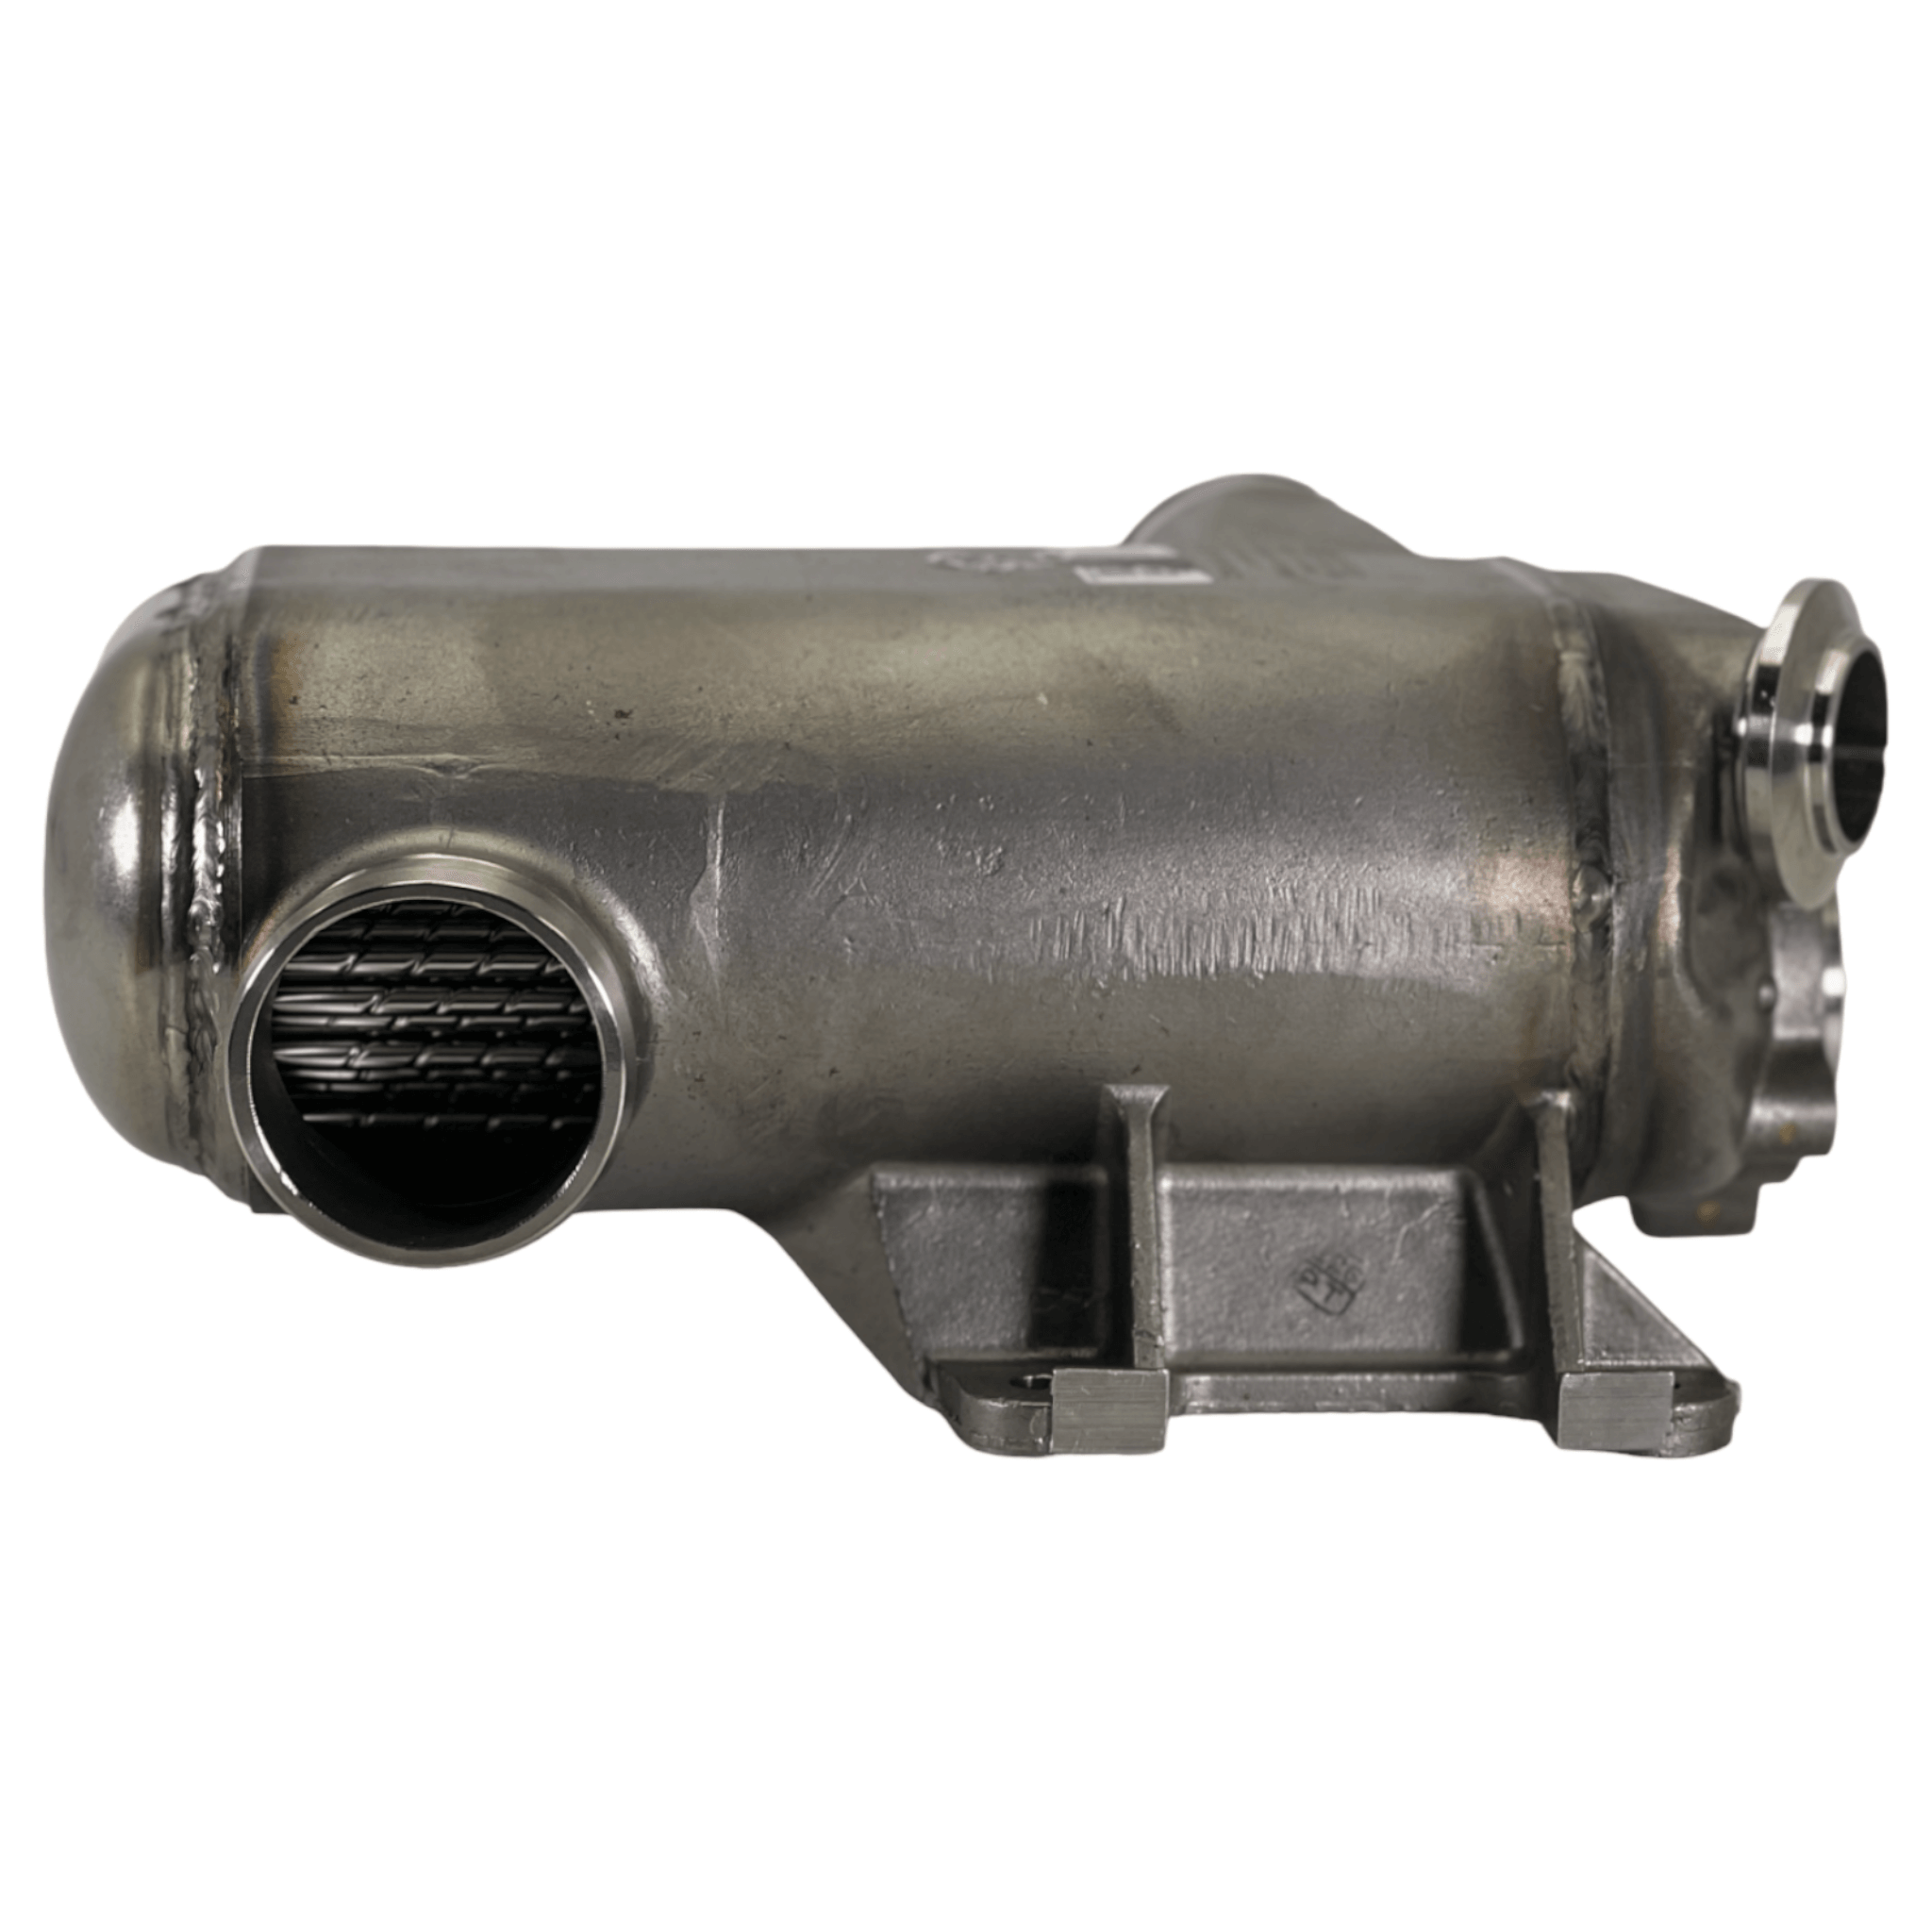 23533180 Genuine Detroit Diesel EGR Exhaust Gas Recirculation Cooler - ADVANCED TRUCK PARTS